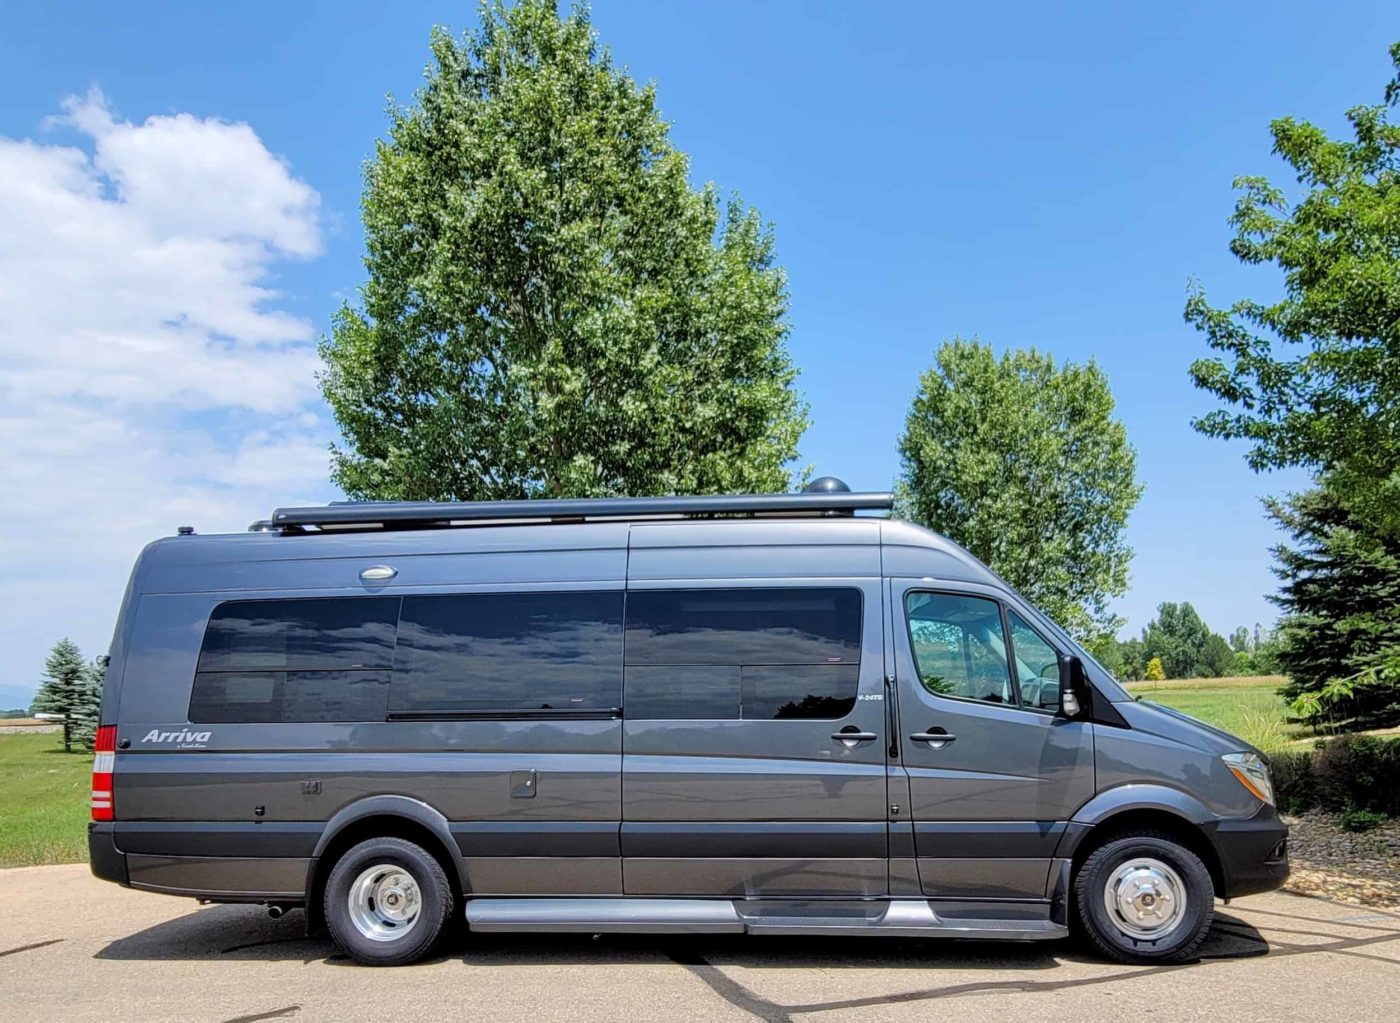 2018 Mercedes Sprinter For Sale in Longmont, Colorado - Van Viewer